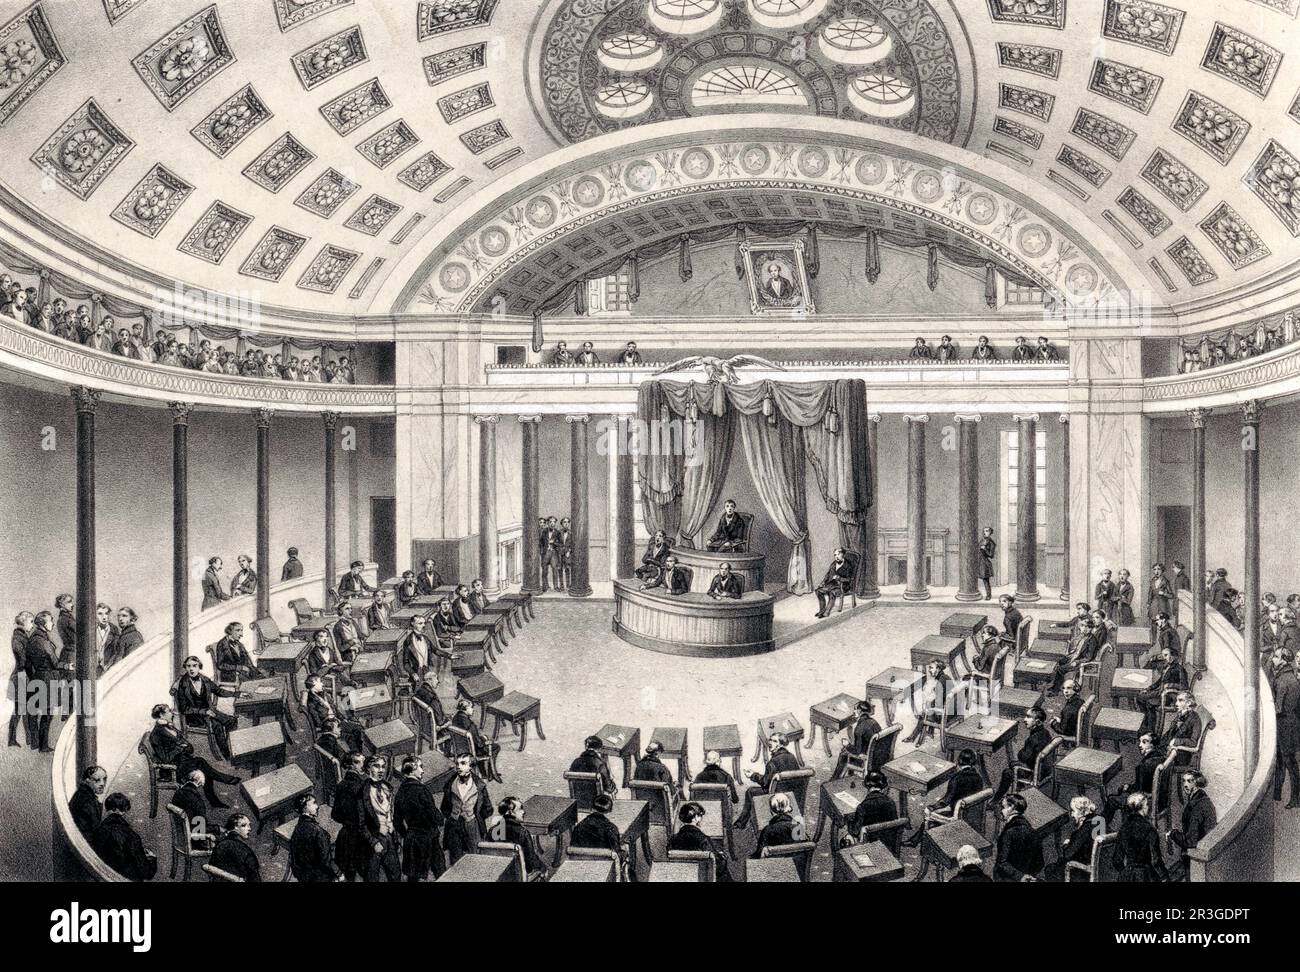 Senate chamber, Washington D.C., circa 1850. Stock Photo